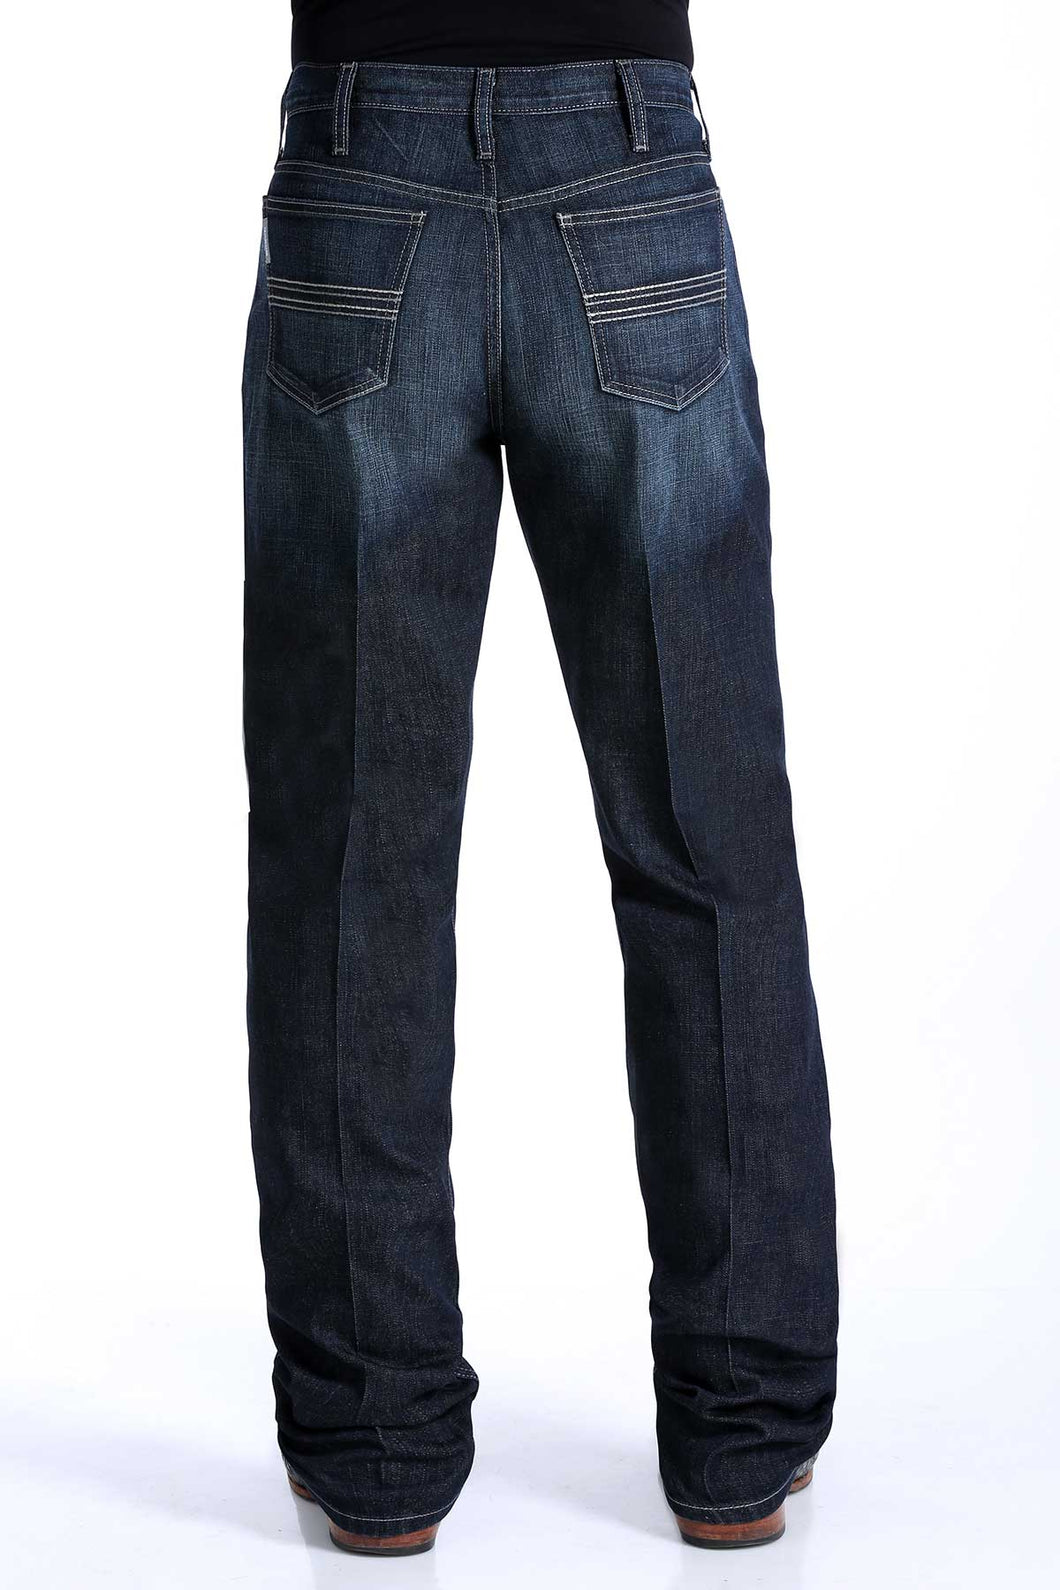 Cinch Men's Dark Wash Silver Label Slim Straight Jean